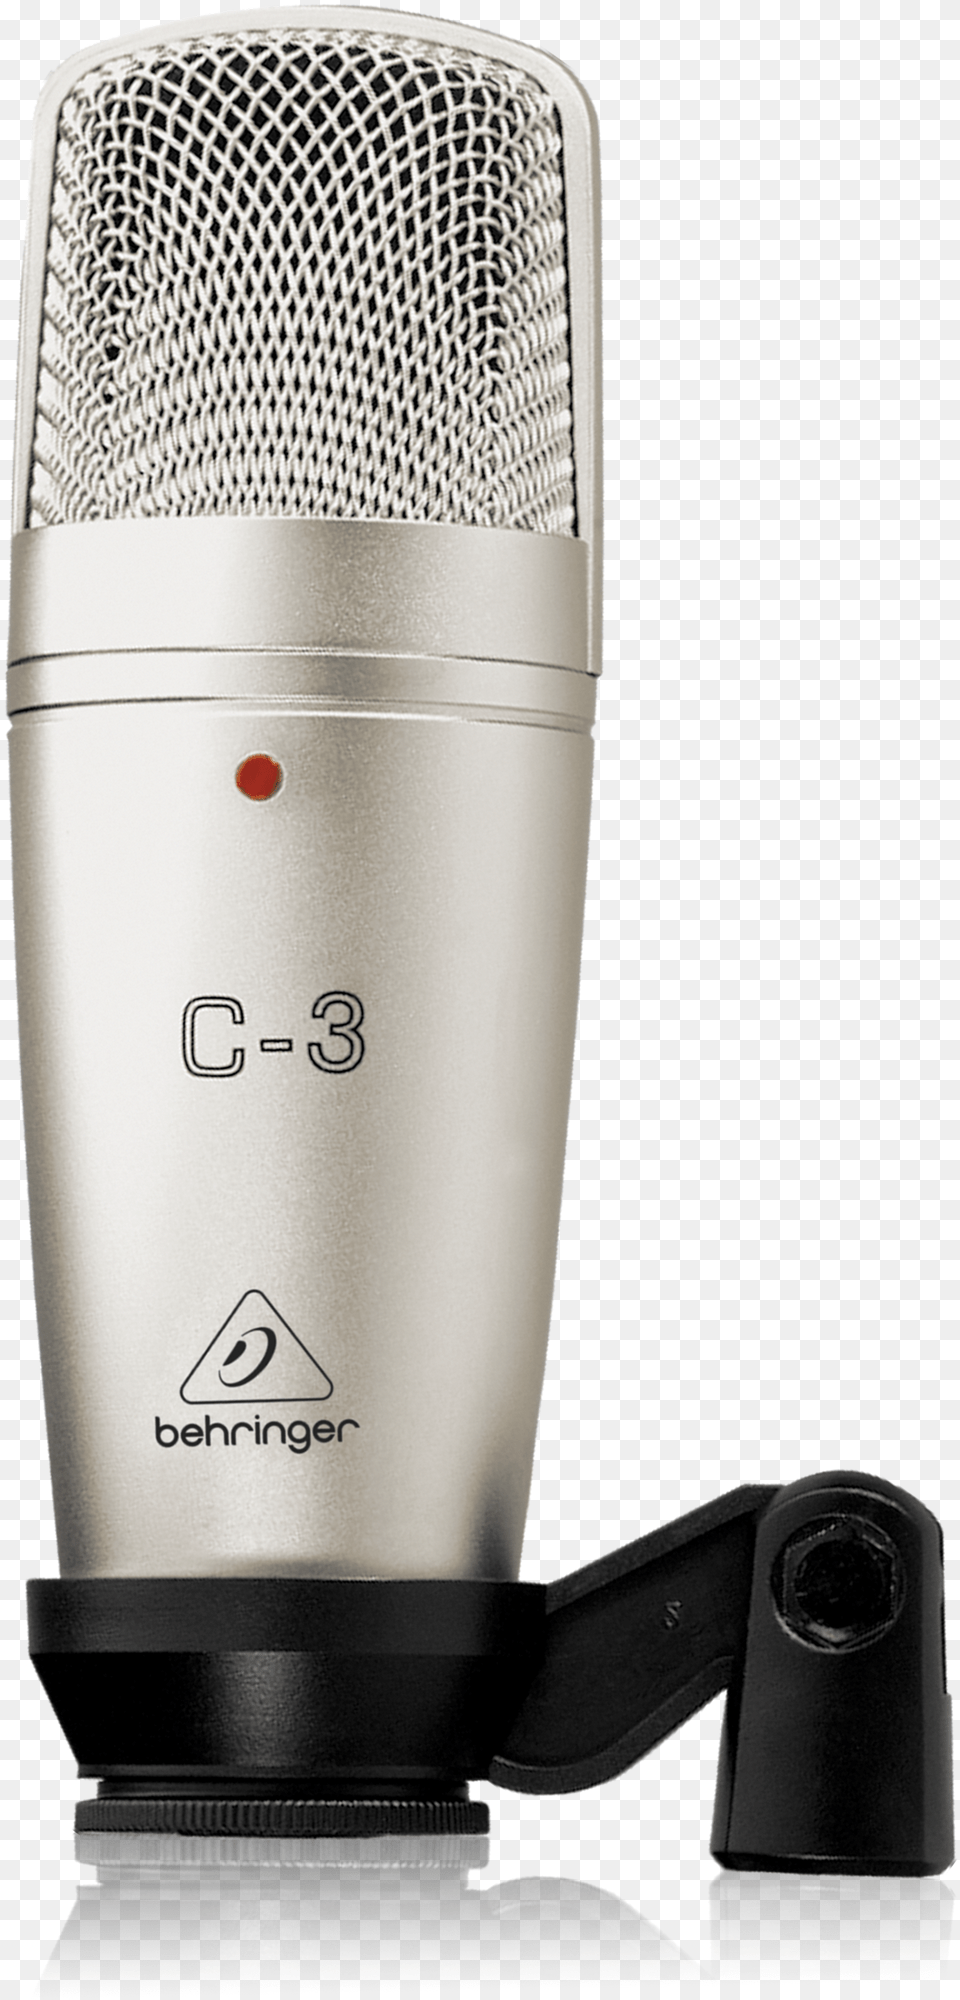 Behringer Product C 3 Behringer C1, Electrical Device, Microphone, Bottle, Shaker Free Transparent Png